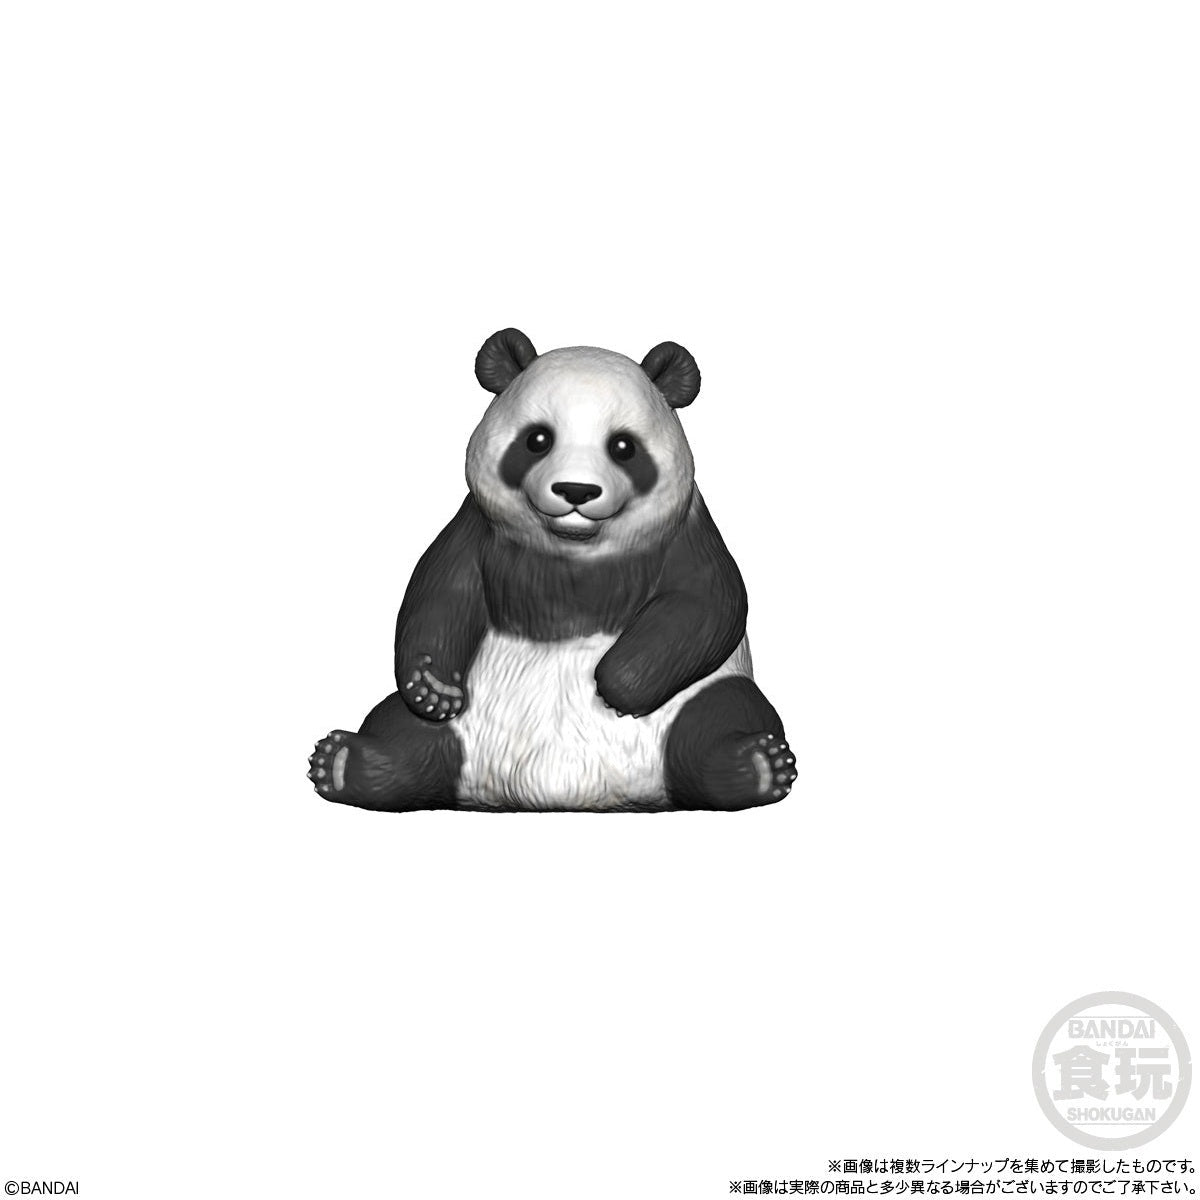 Te-Nori Friends 9 Animal-Panda-Bandai Namco-Ace Cards & Collectibles